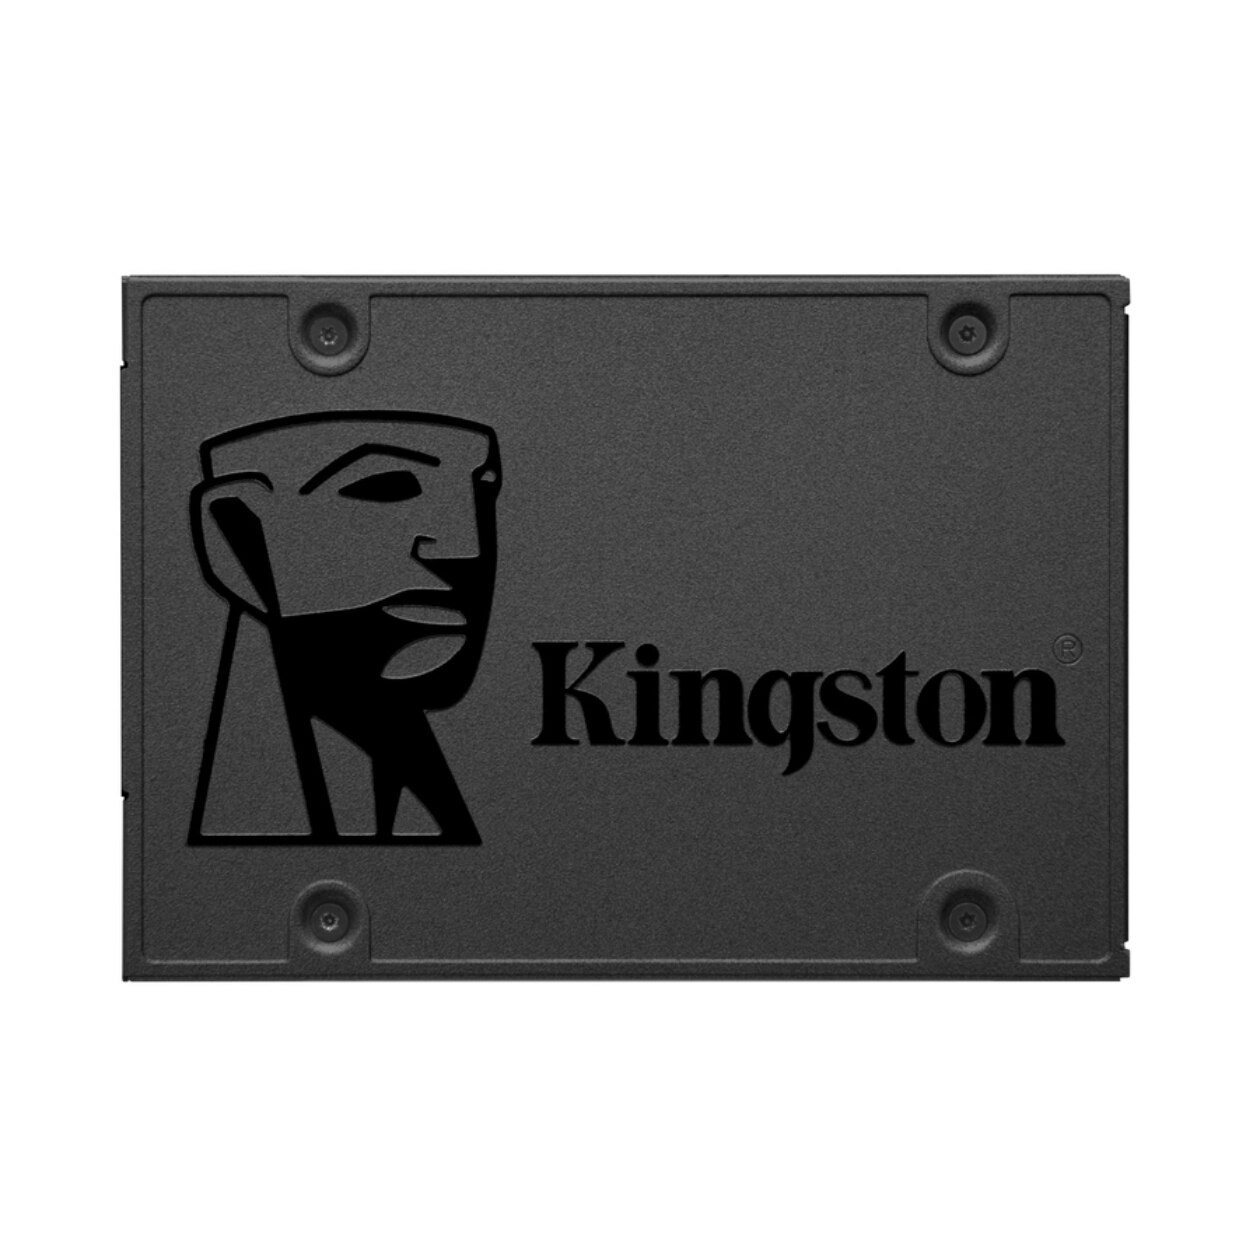 Kingston Q500 960 GB Solid State Drive